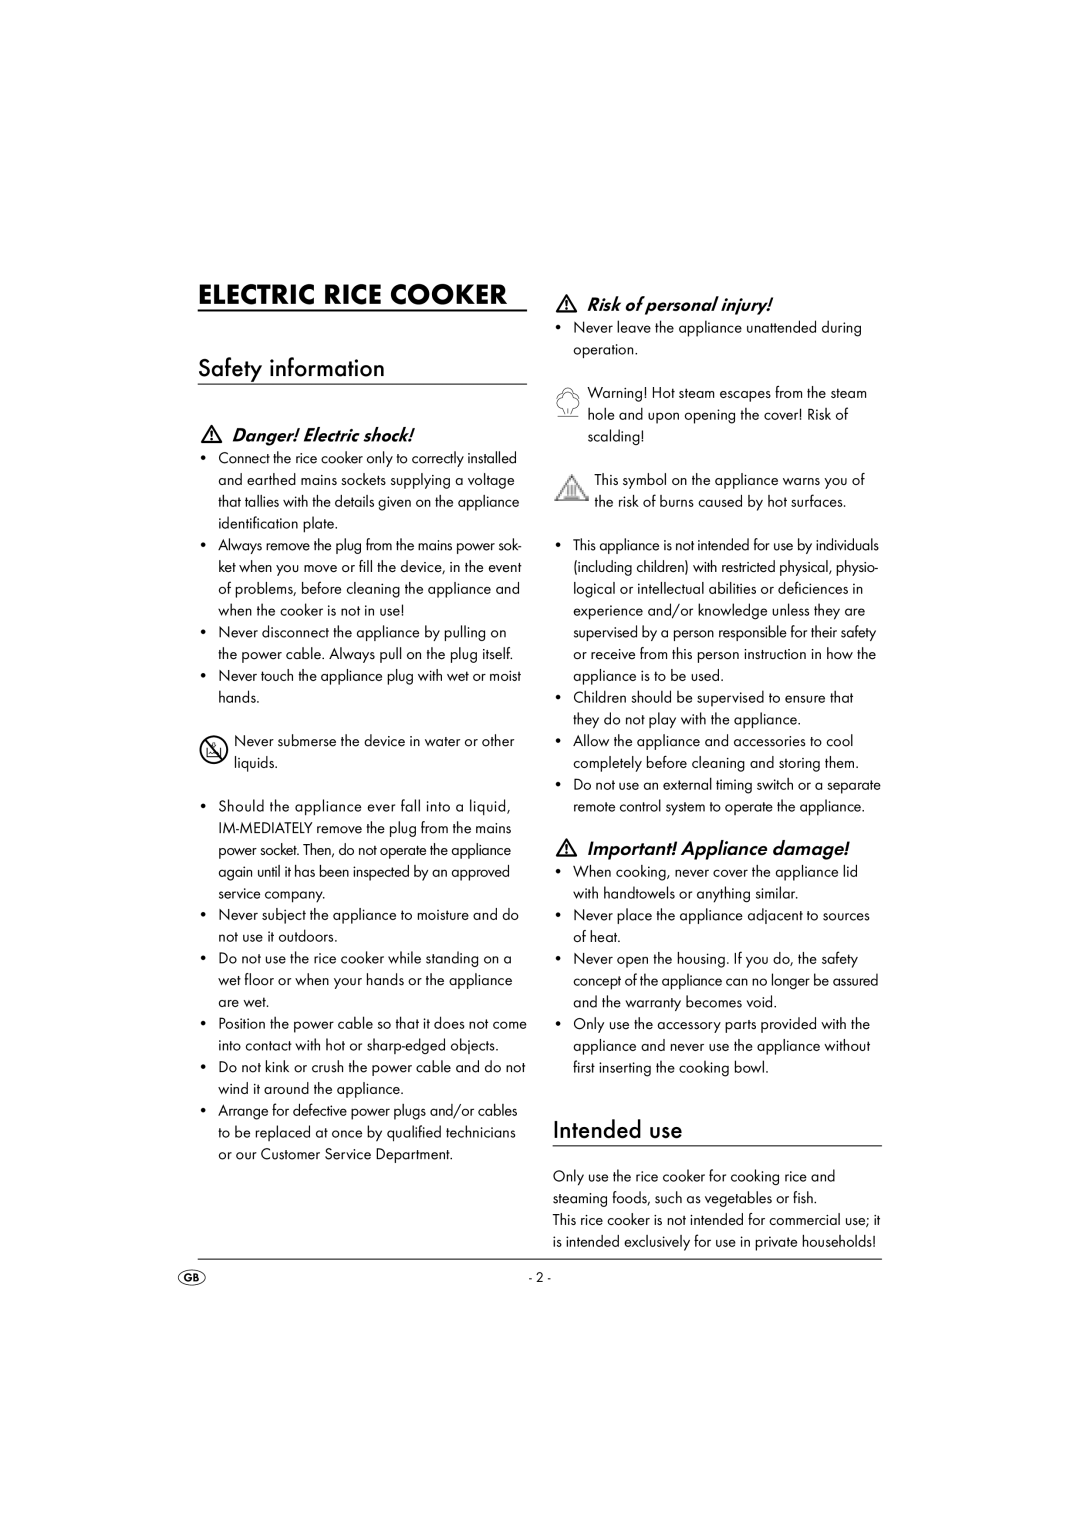 Kompernass SRK 700 A16 manual Electric Rice Cooker, Safety information, Intended use, Danger! Electric shock 